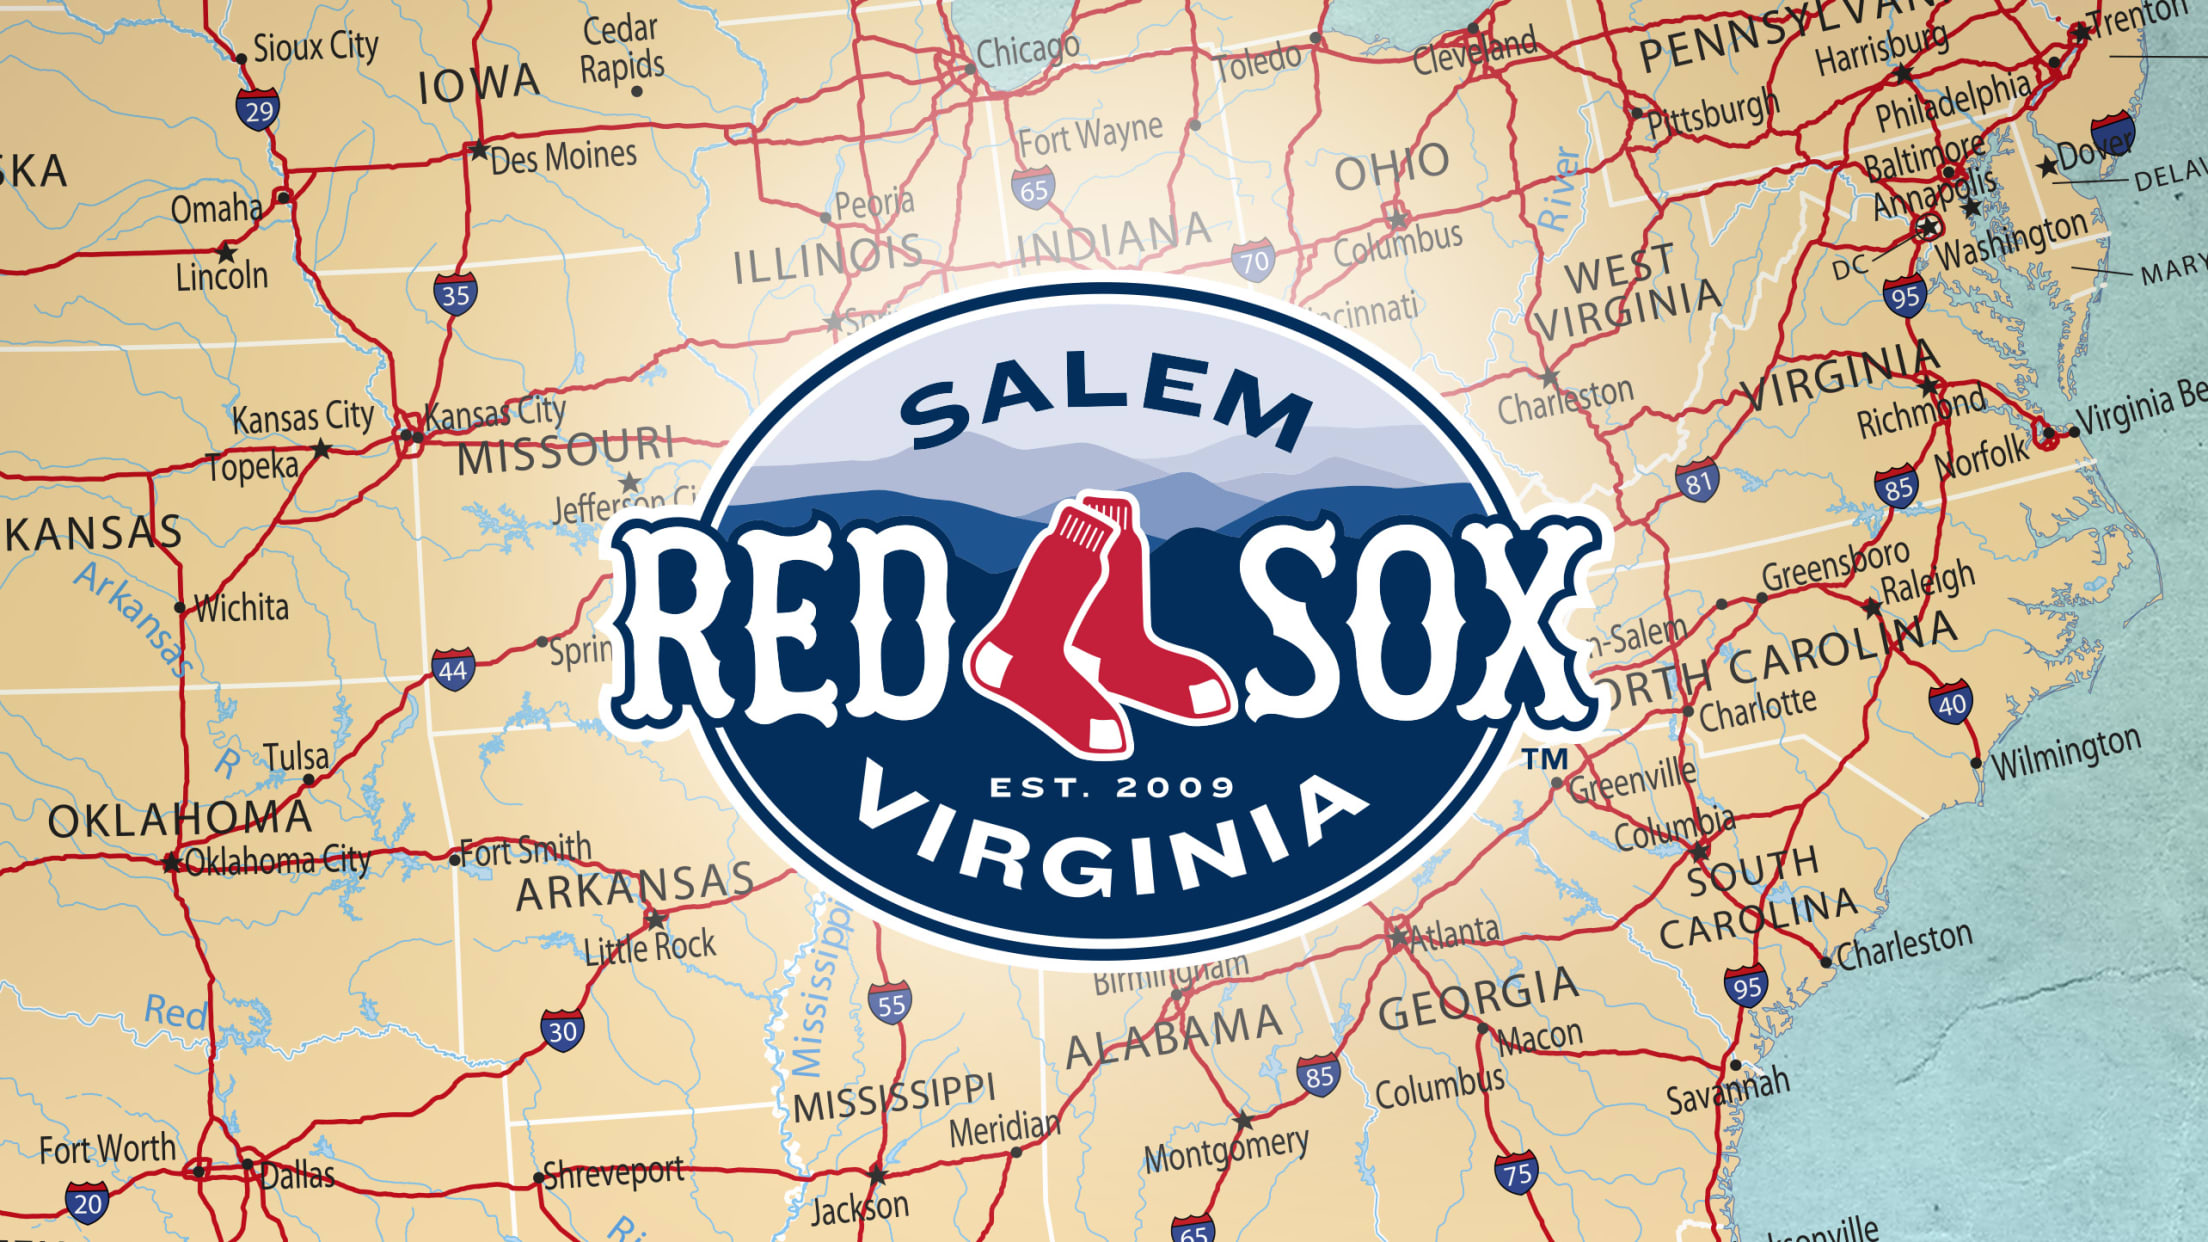 Salem Red Sox - Mugsy had a wonderful time visiting